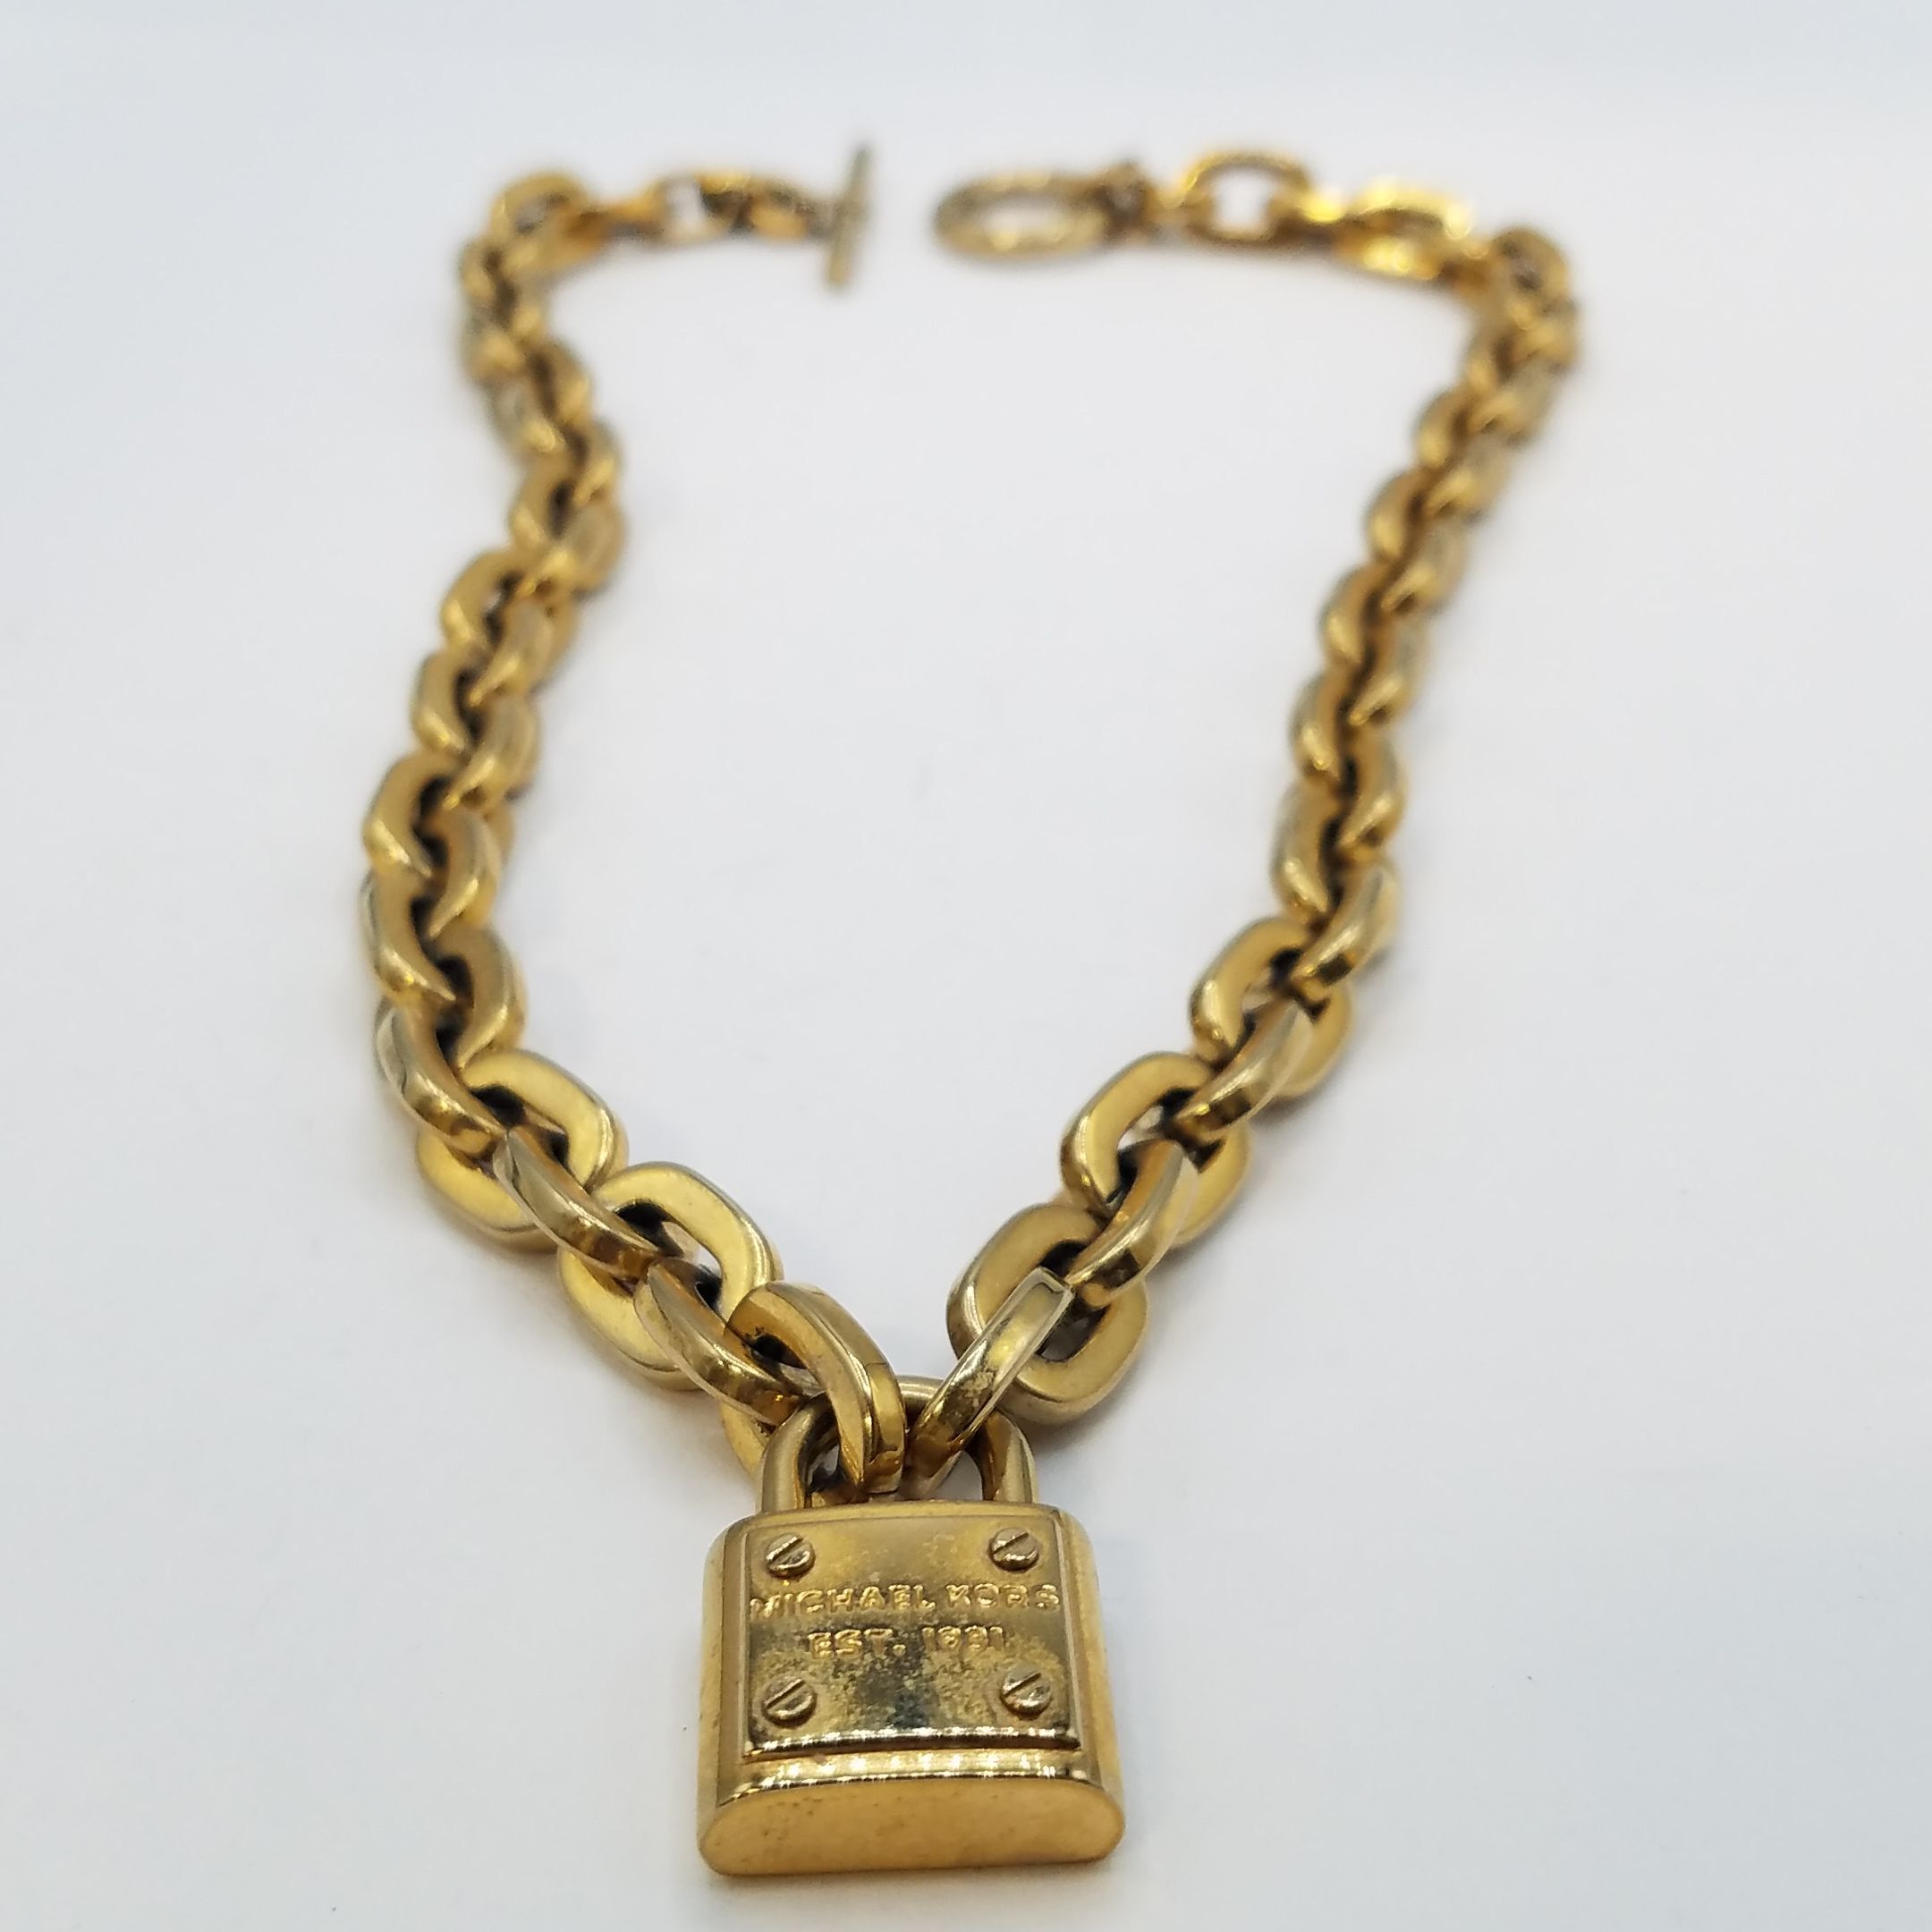 Michael Kors "Hamilton" Handbag & Signature Lock Necklace |  Wichita Falls, TX Auctions | Seize the Deal